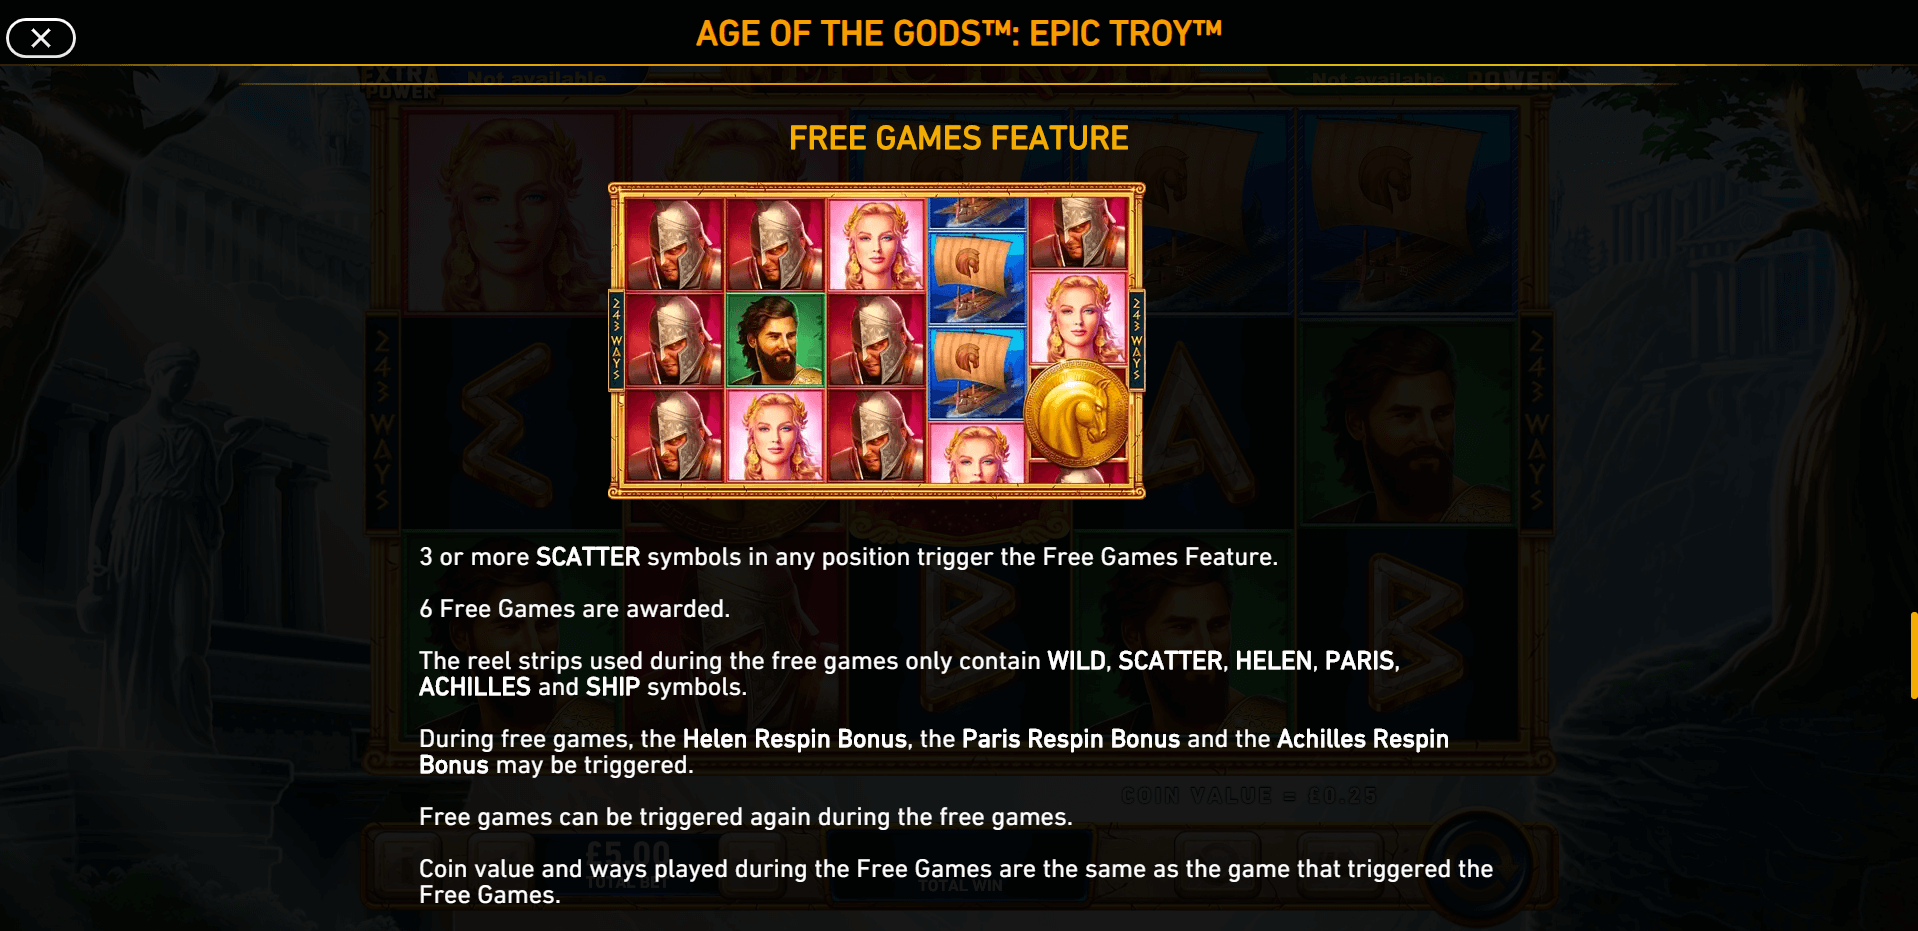 age of the gods epic troy slot machine detail image 7